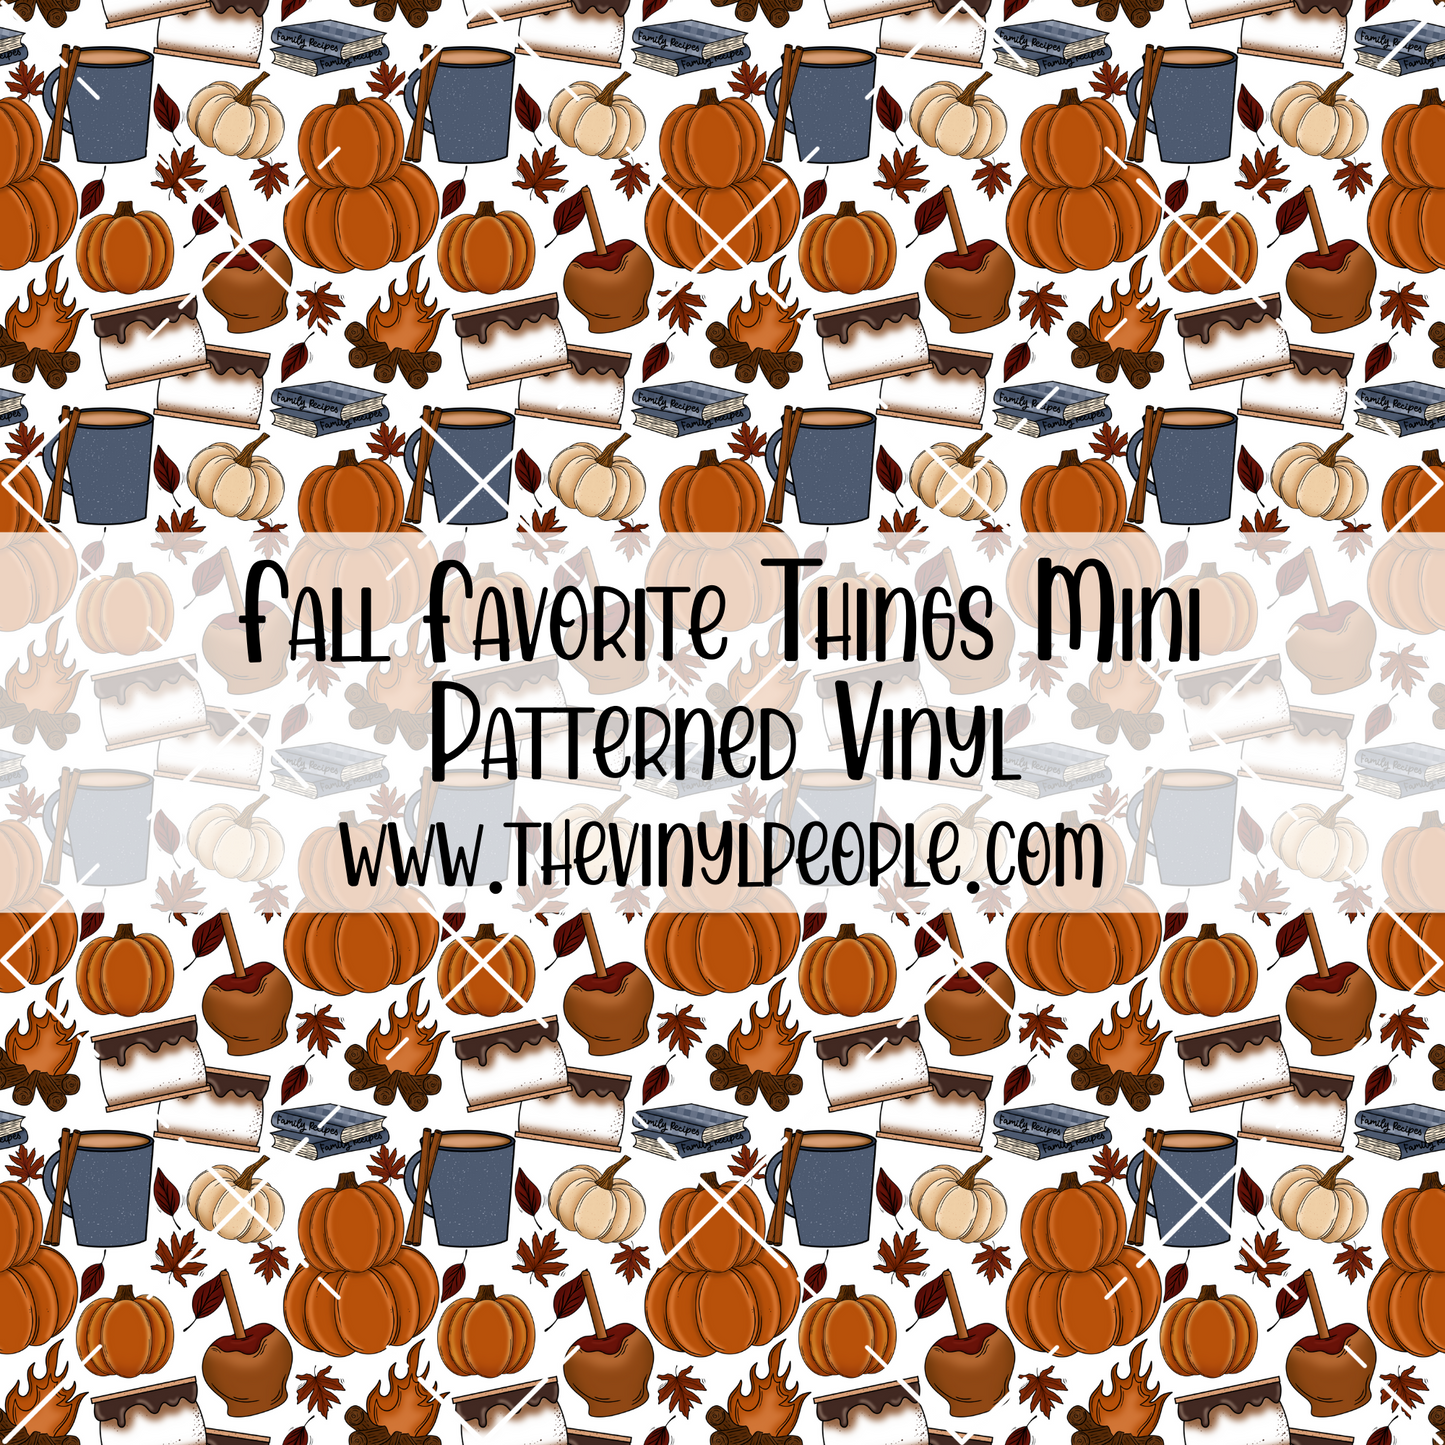 Fall Favorite Things Patterned Vinyl